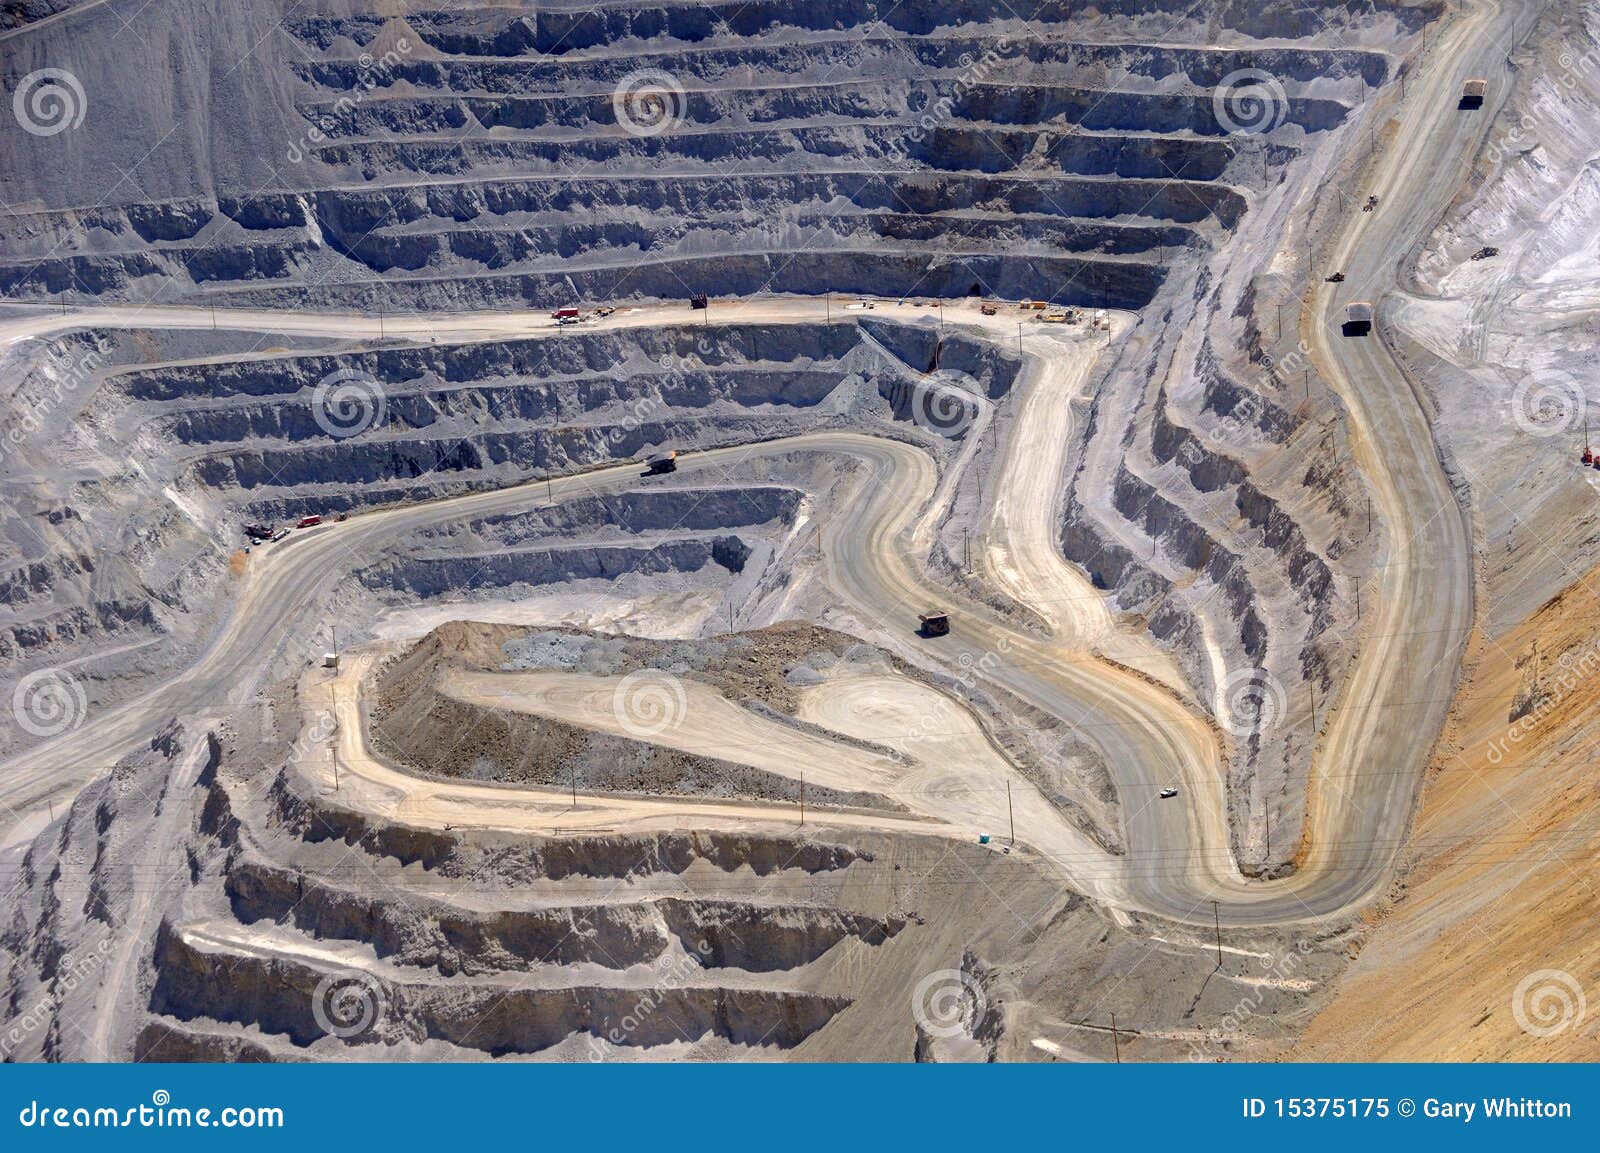 close-up of bingham kennecott copper mine